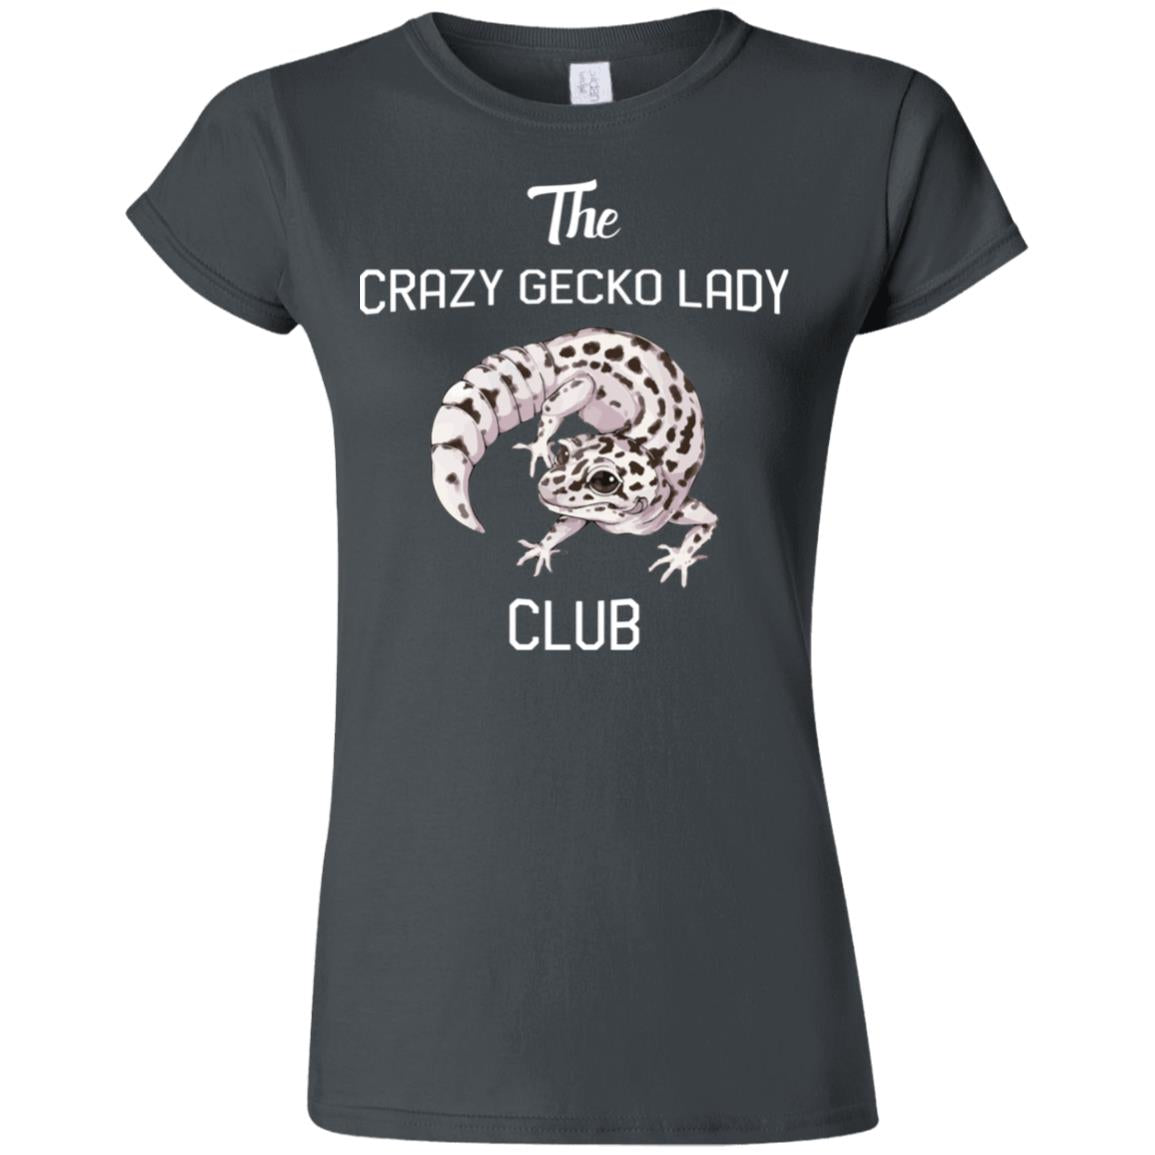 The Crazy Gecko Lady Club - Womens T-Shirt